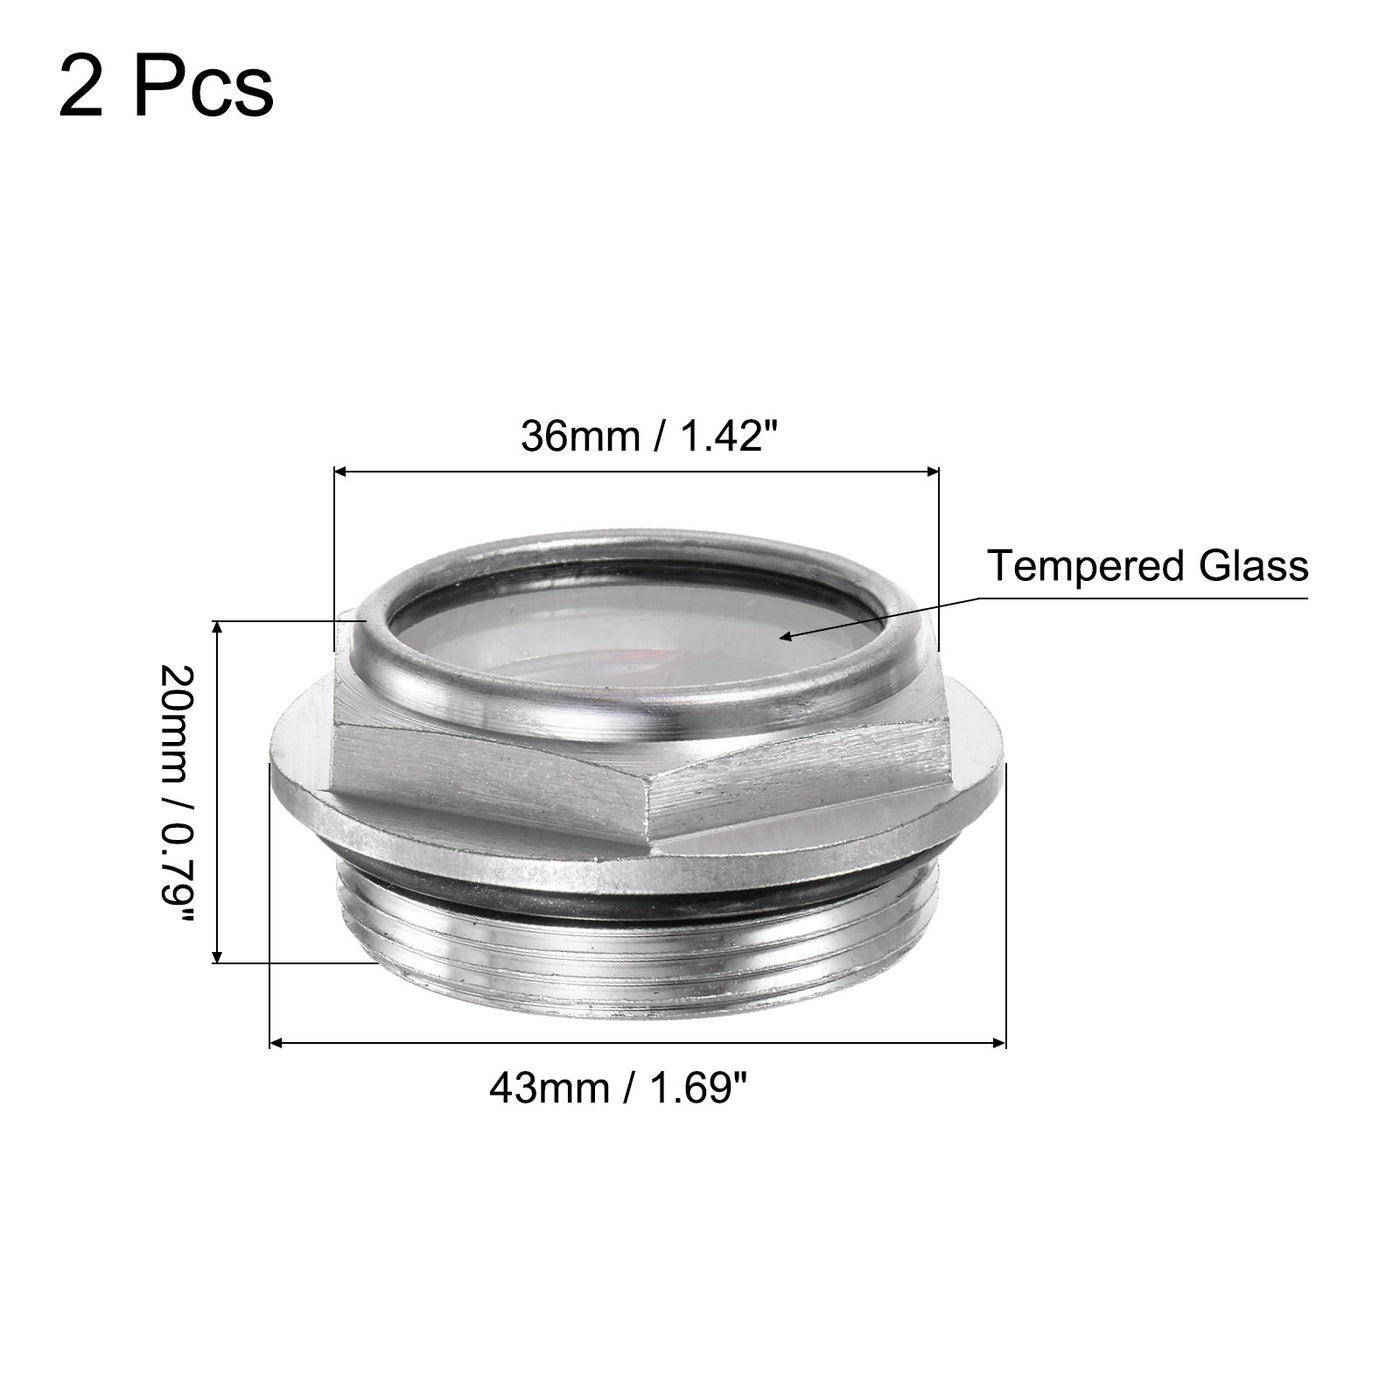 Uxcell Uxcell Air Compressor Oil Level Gauge Sight Glass M33x2mm Male Thread Aluminum 2Pcs